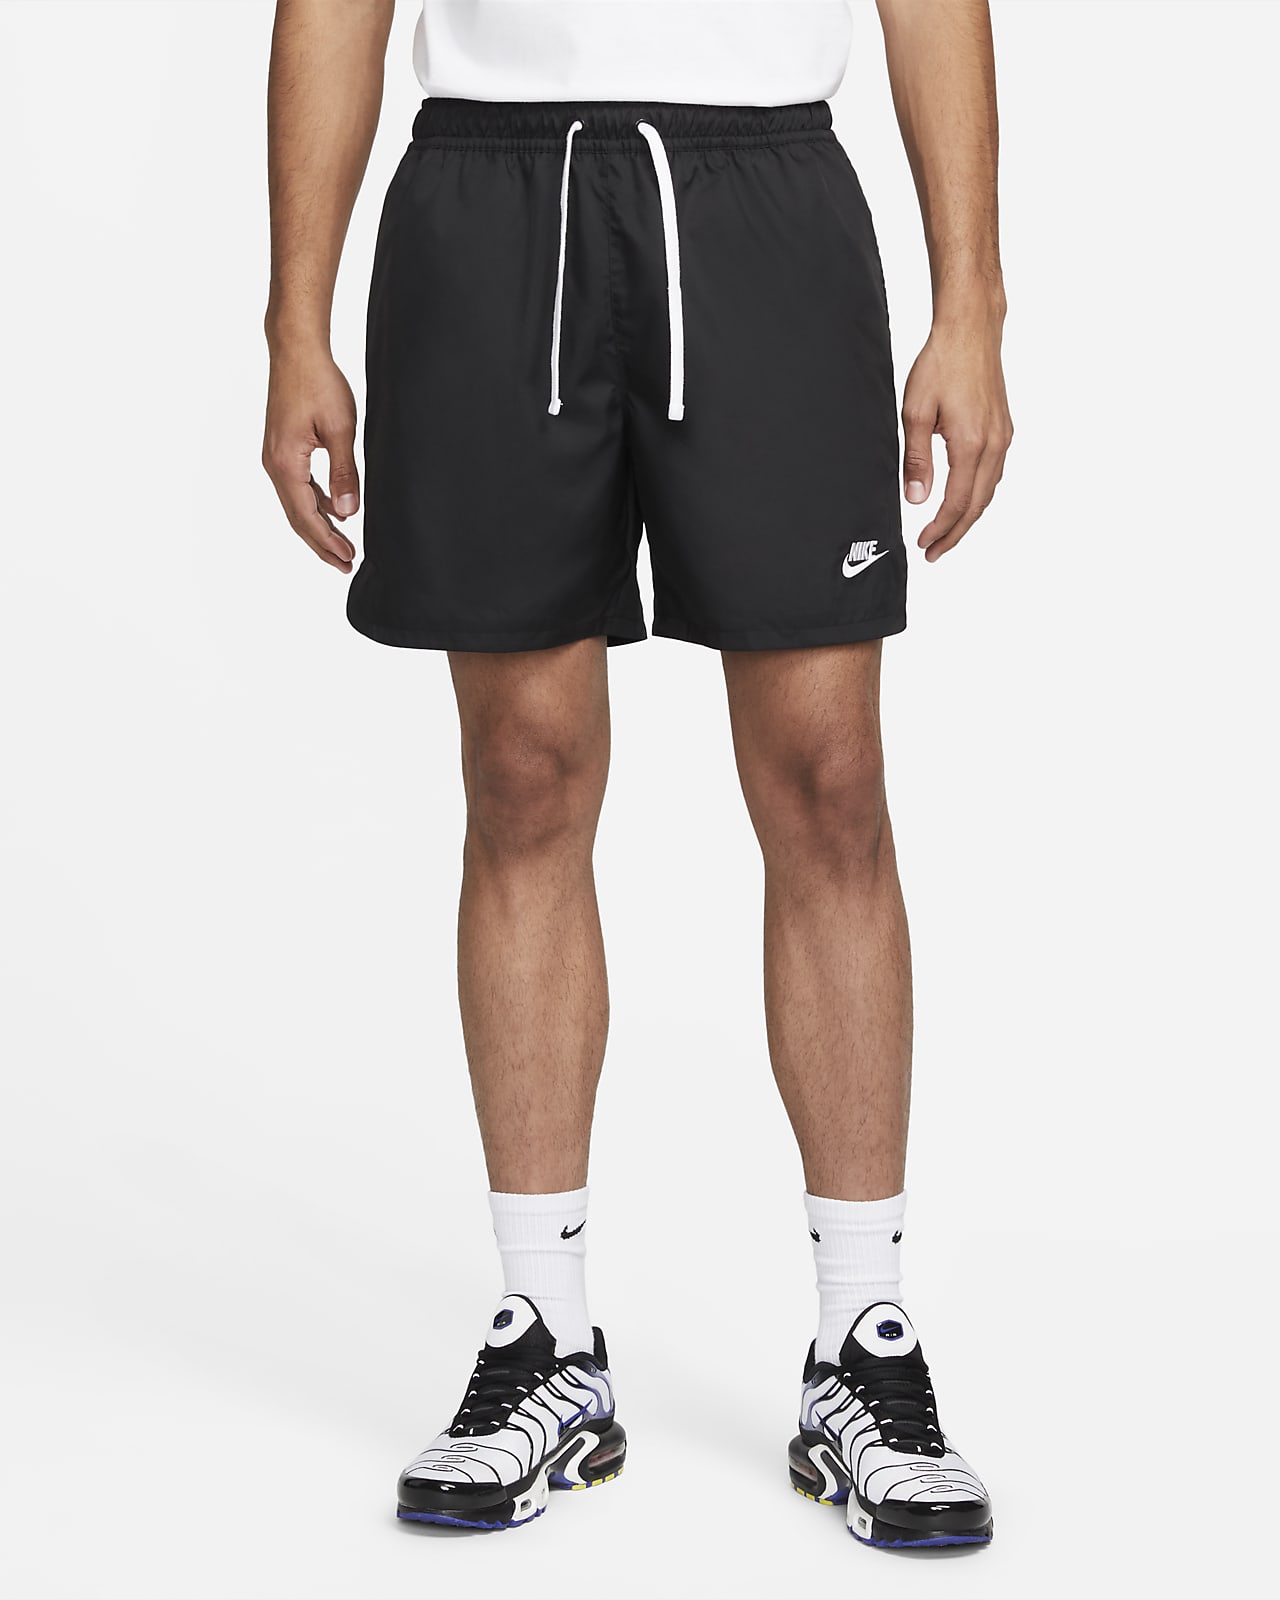 Nike flow woven shorts